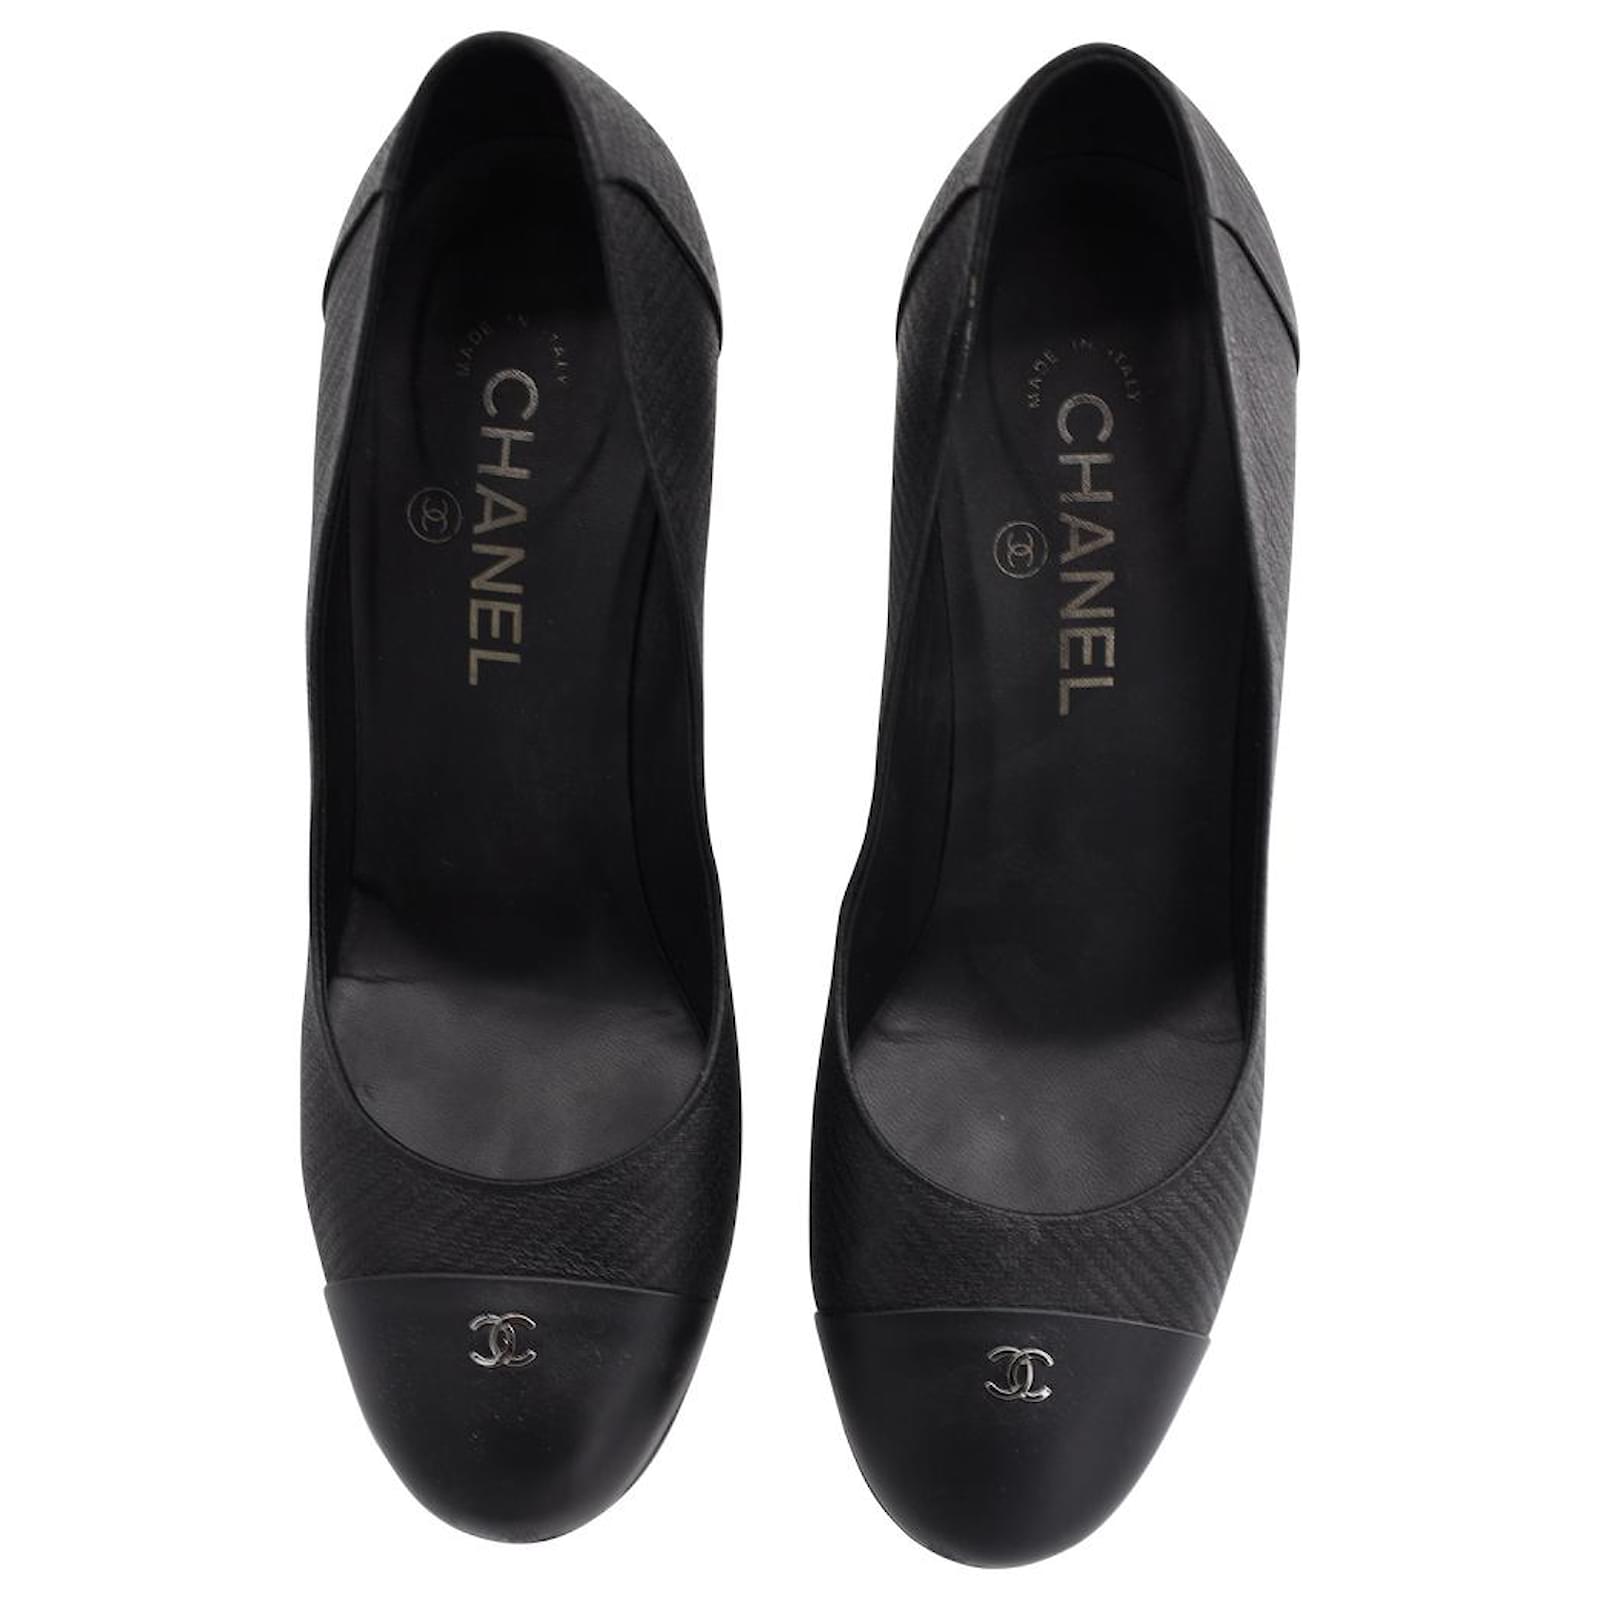 Heels Chanel Chanel Classic Cap Toe Logo Pumps in Black Leather Size 38.5 EU